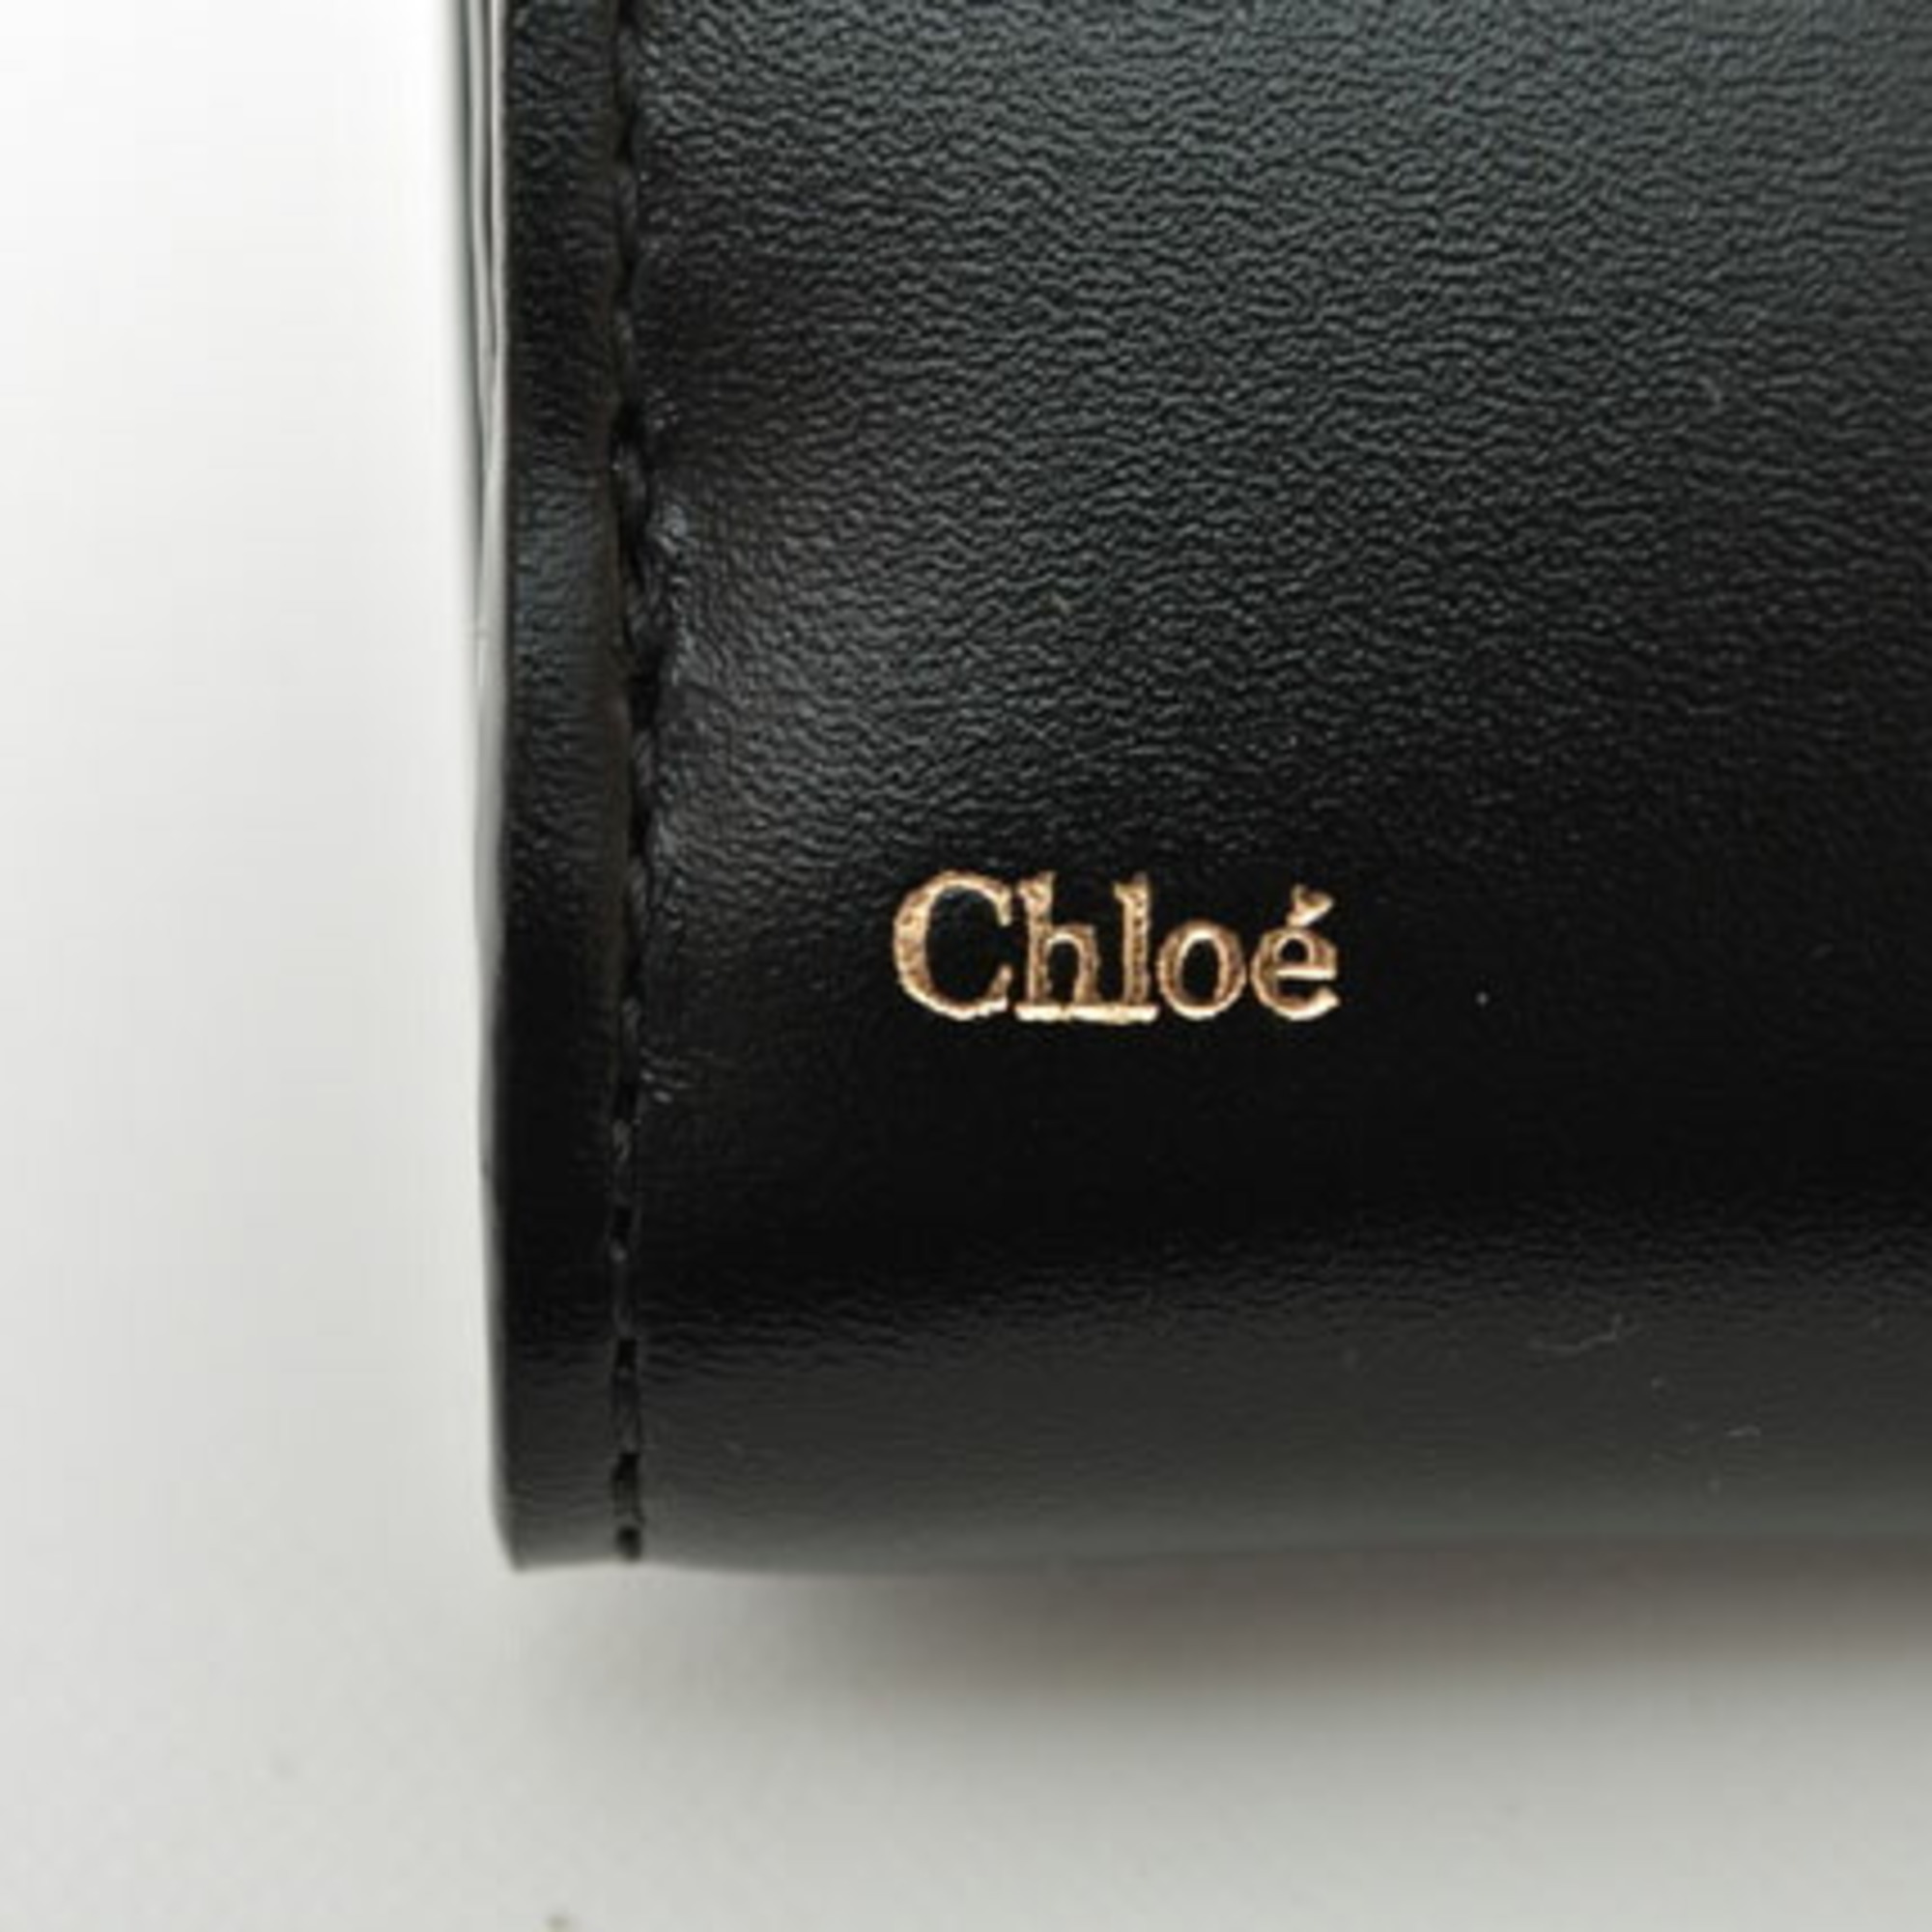 Chloé Chloe Wallet KIKI Small Purse Black Beige